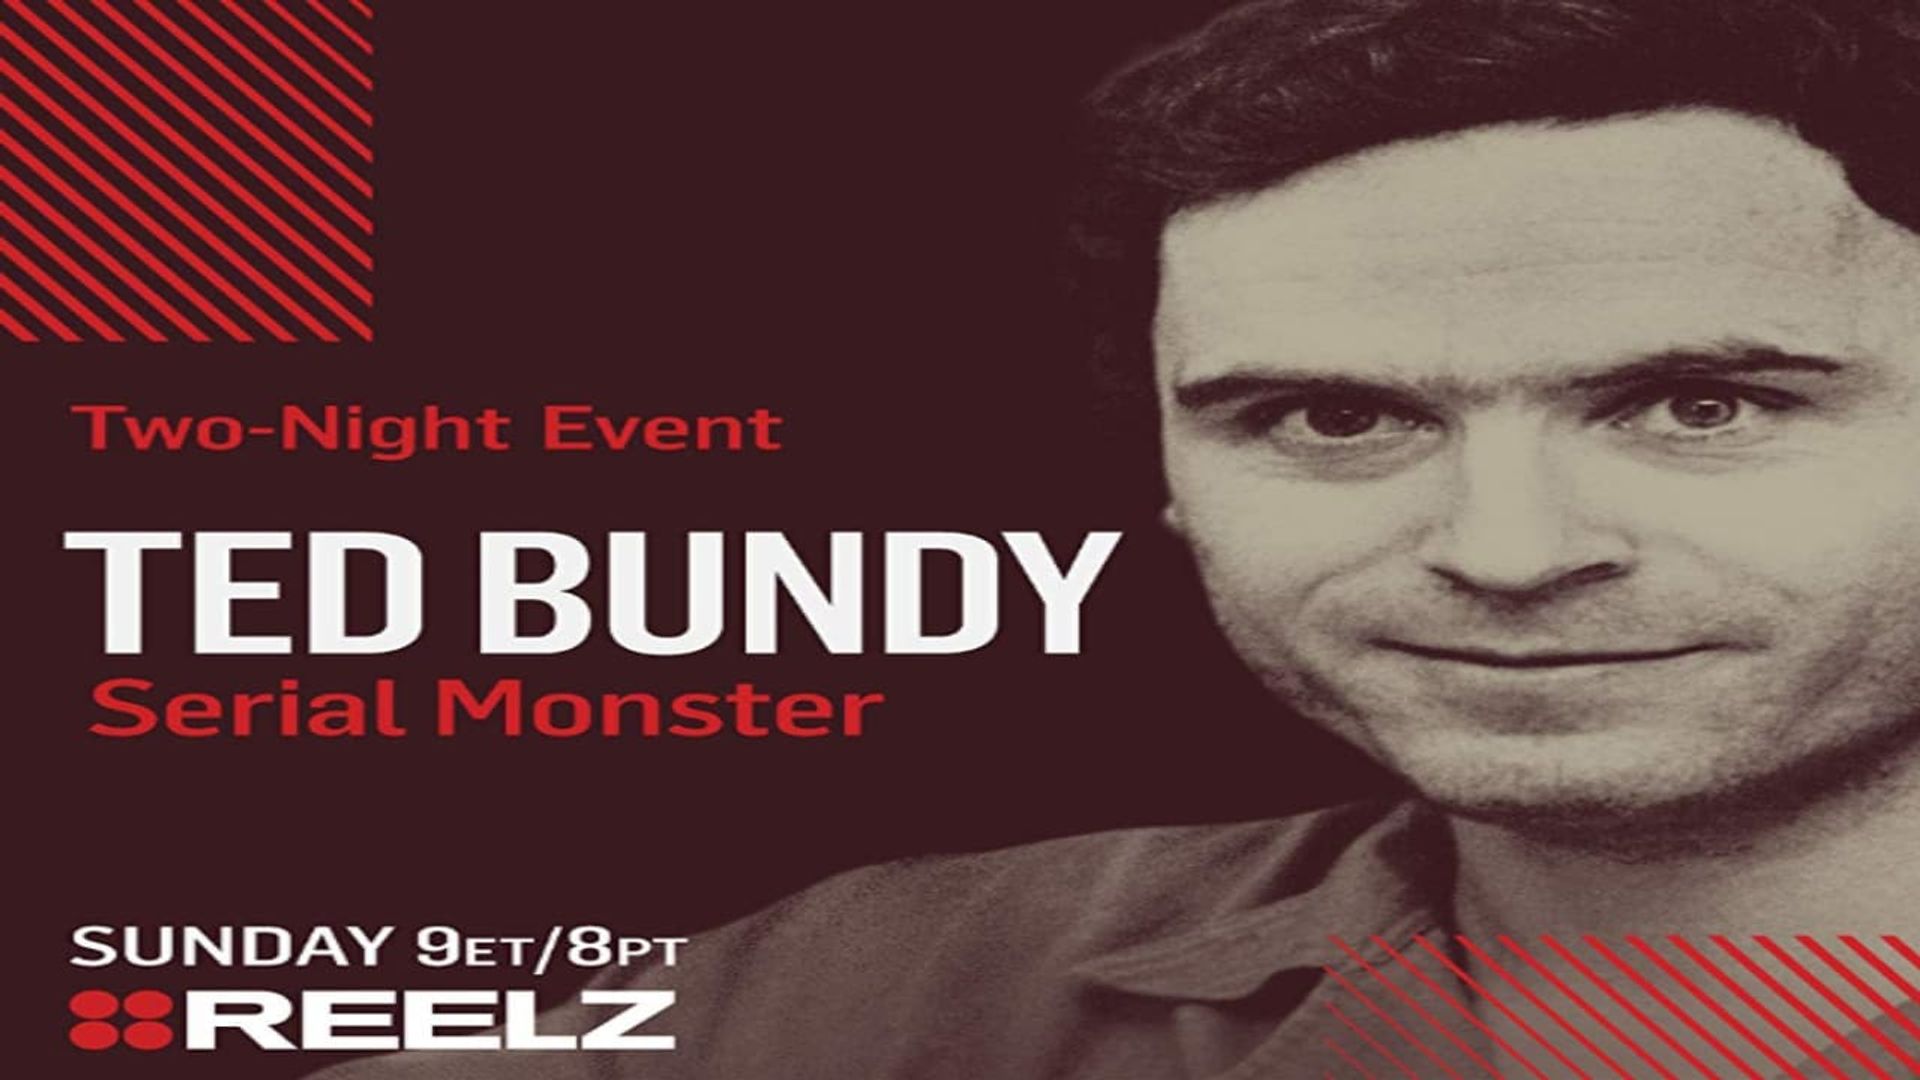 Ted Bundy: Serial Monster background